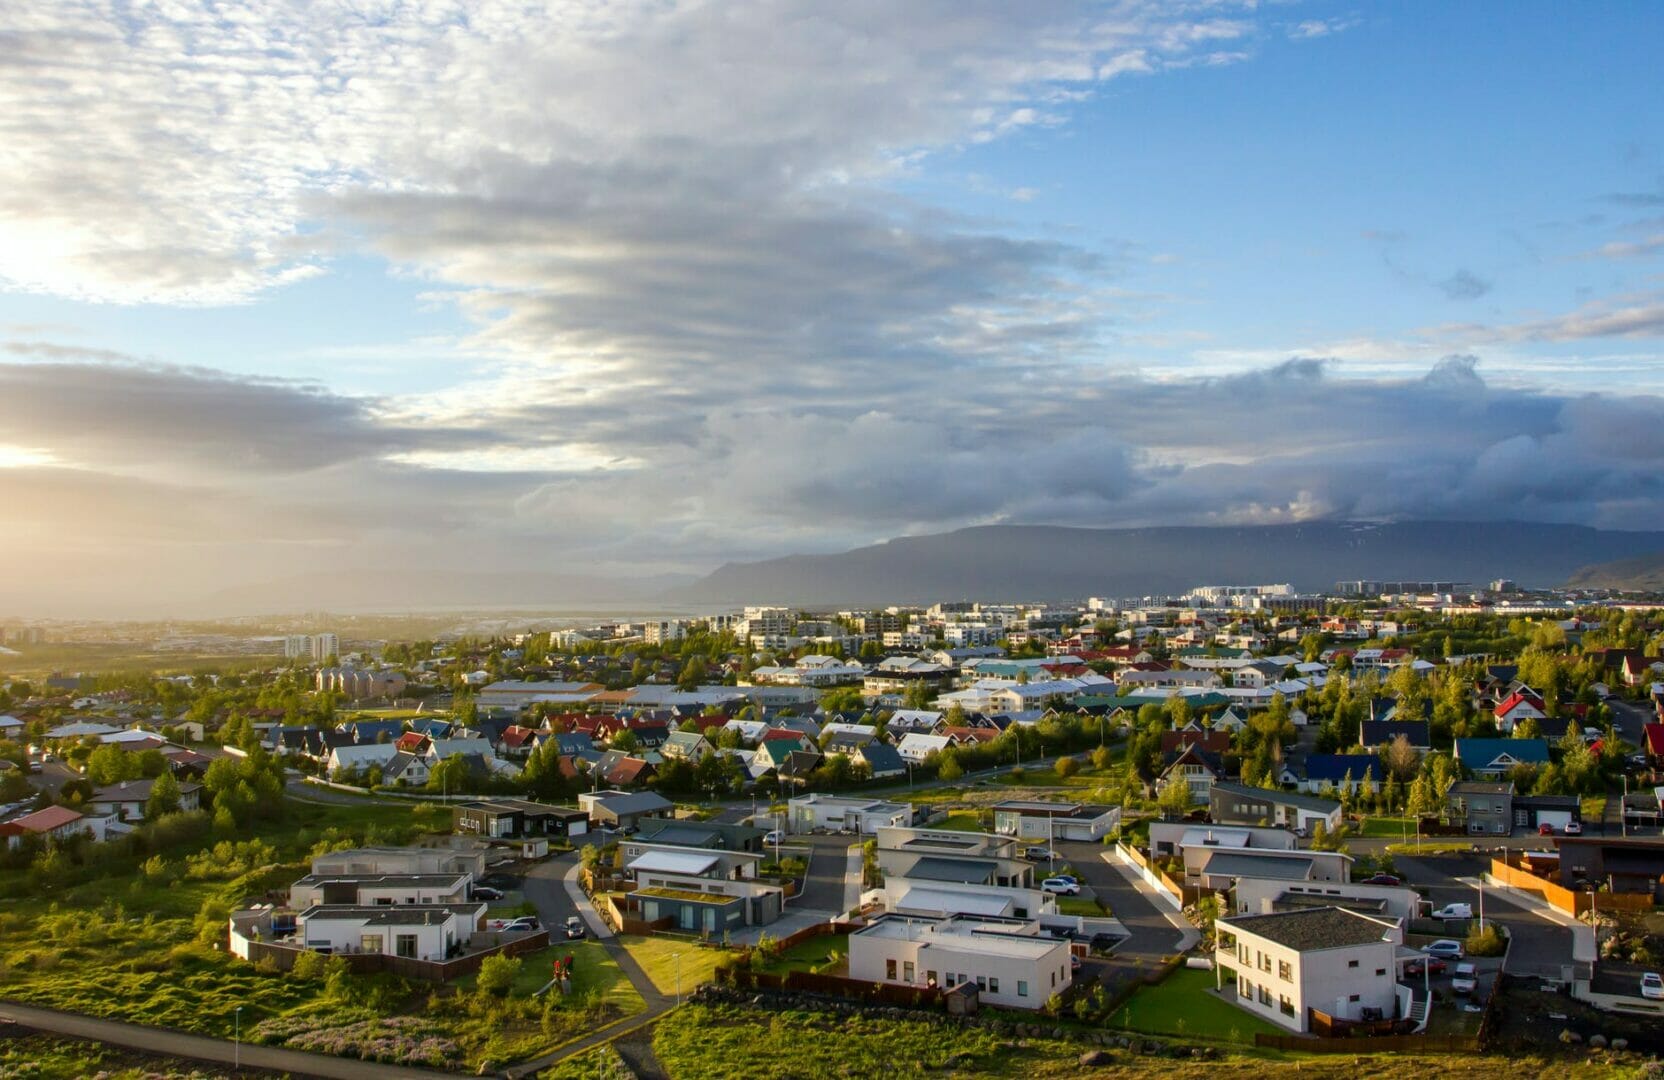 Places to visit in Europe in December - Reykjavík, Iceland